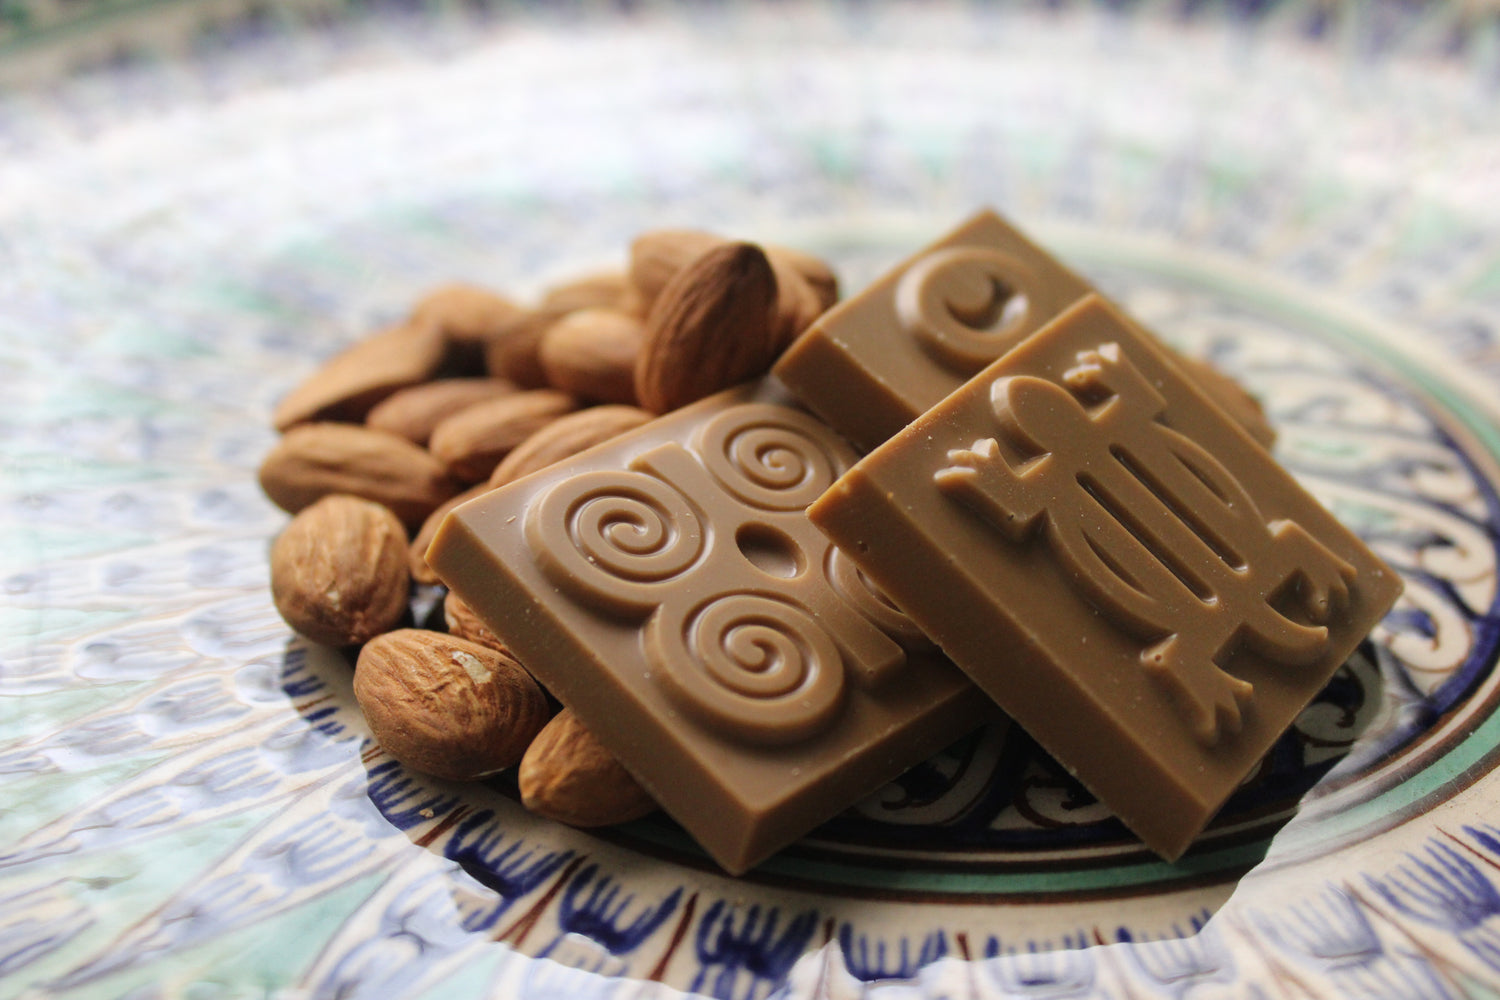 Chocolate with adinkra symbols from Ghana.